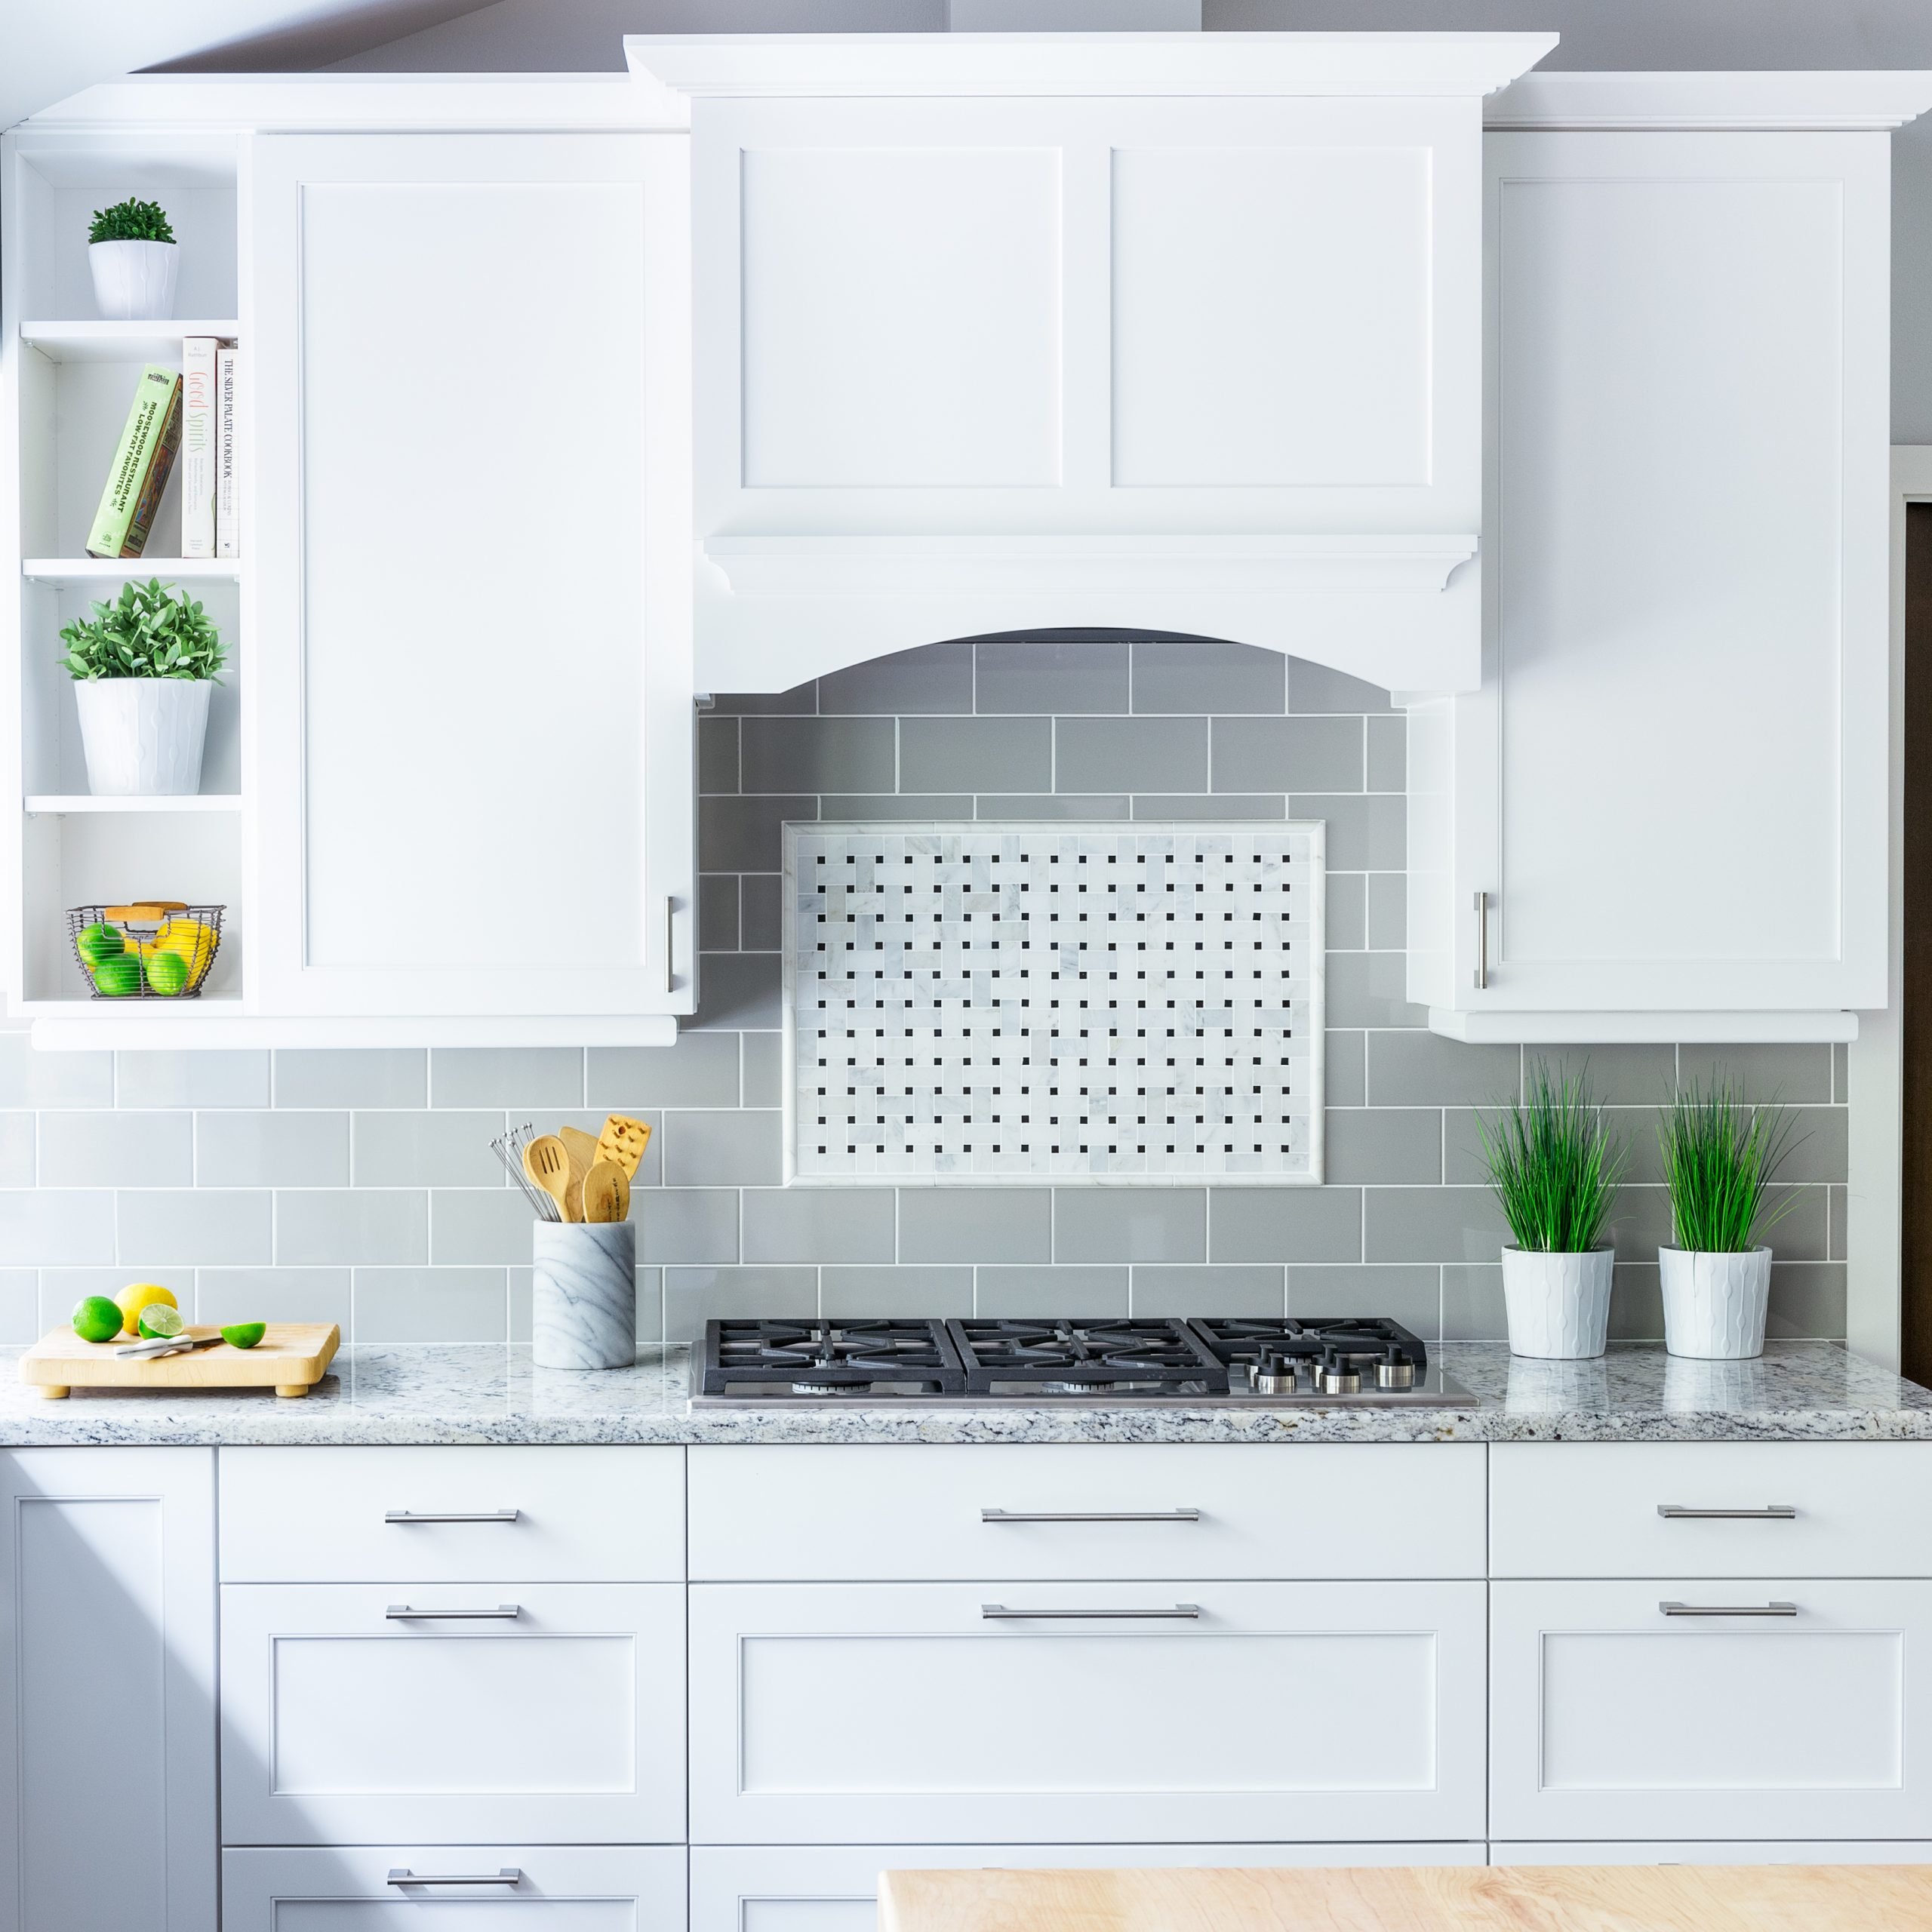 20 Gorgeous Kitchen Backsplash Ideas to Liven up Your Home